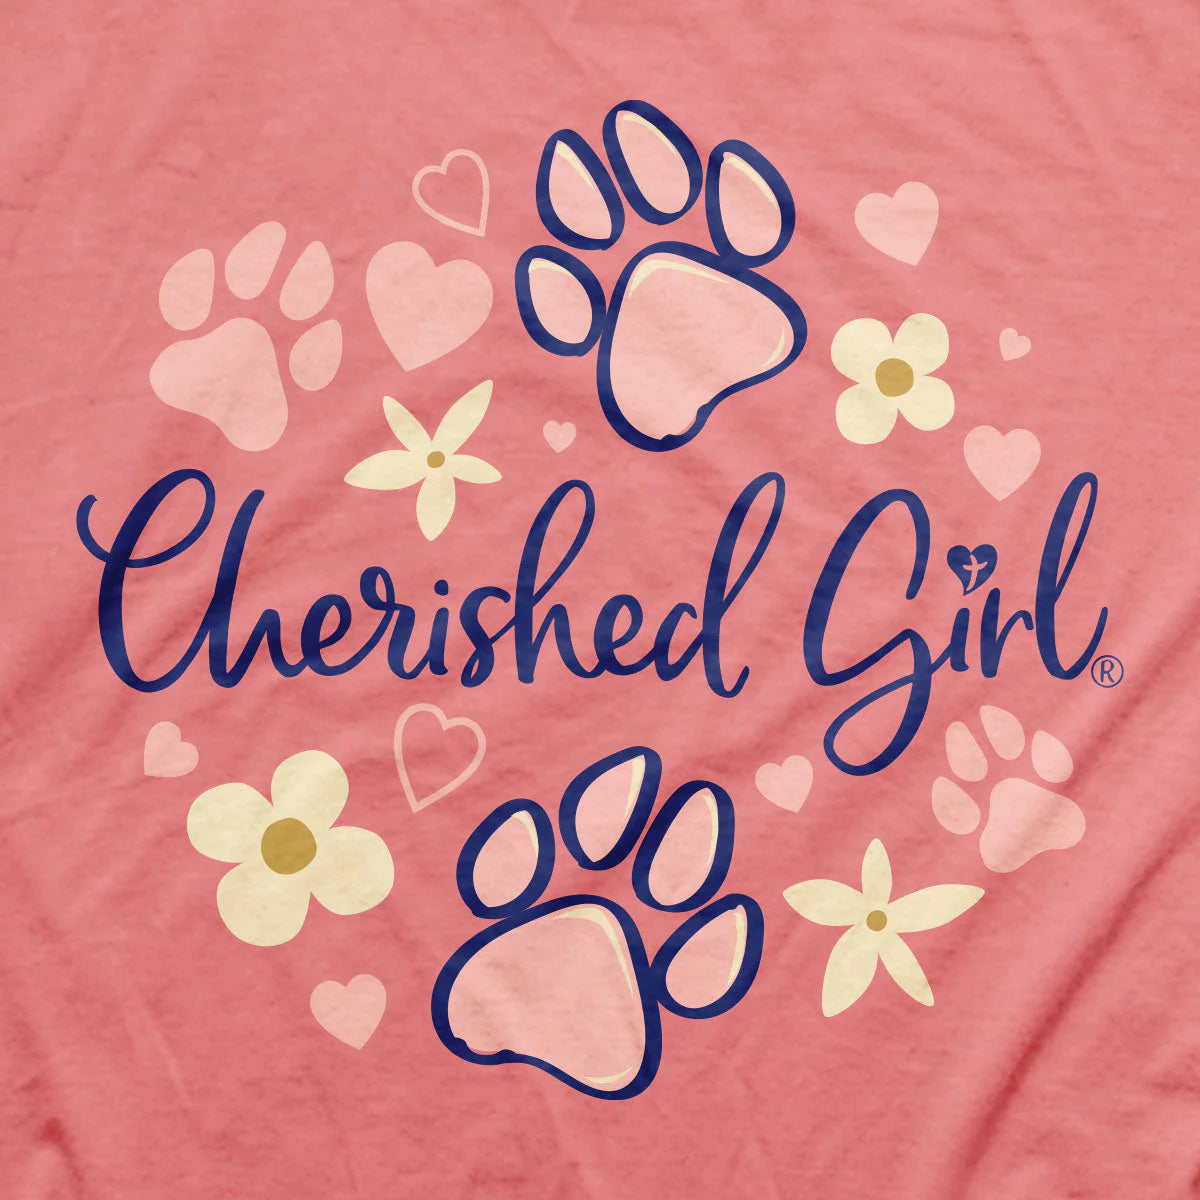 Cherished Girl Womens T-Shirt My Dog Cherished Girl® Apparel Short Sleeve T-shirts Women's